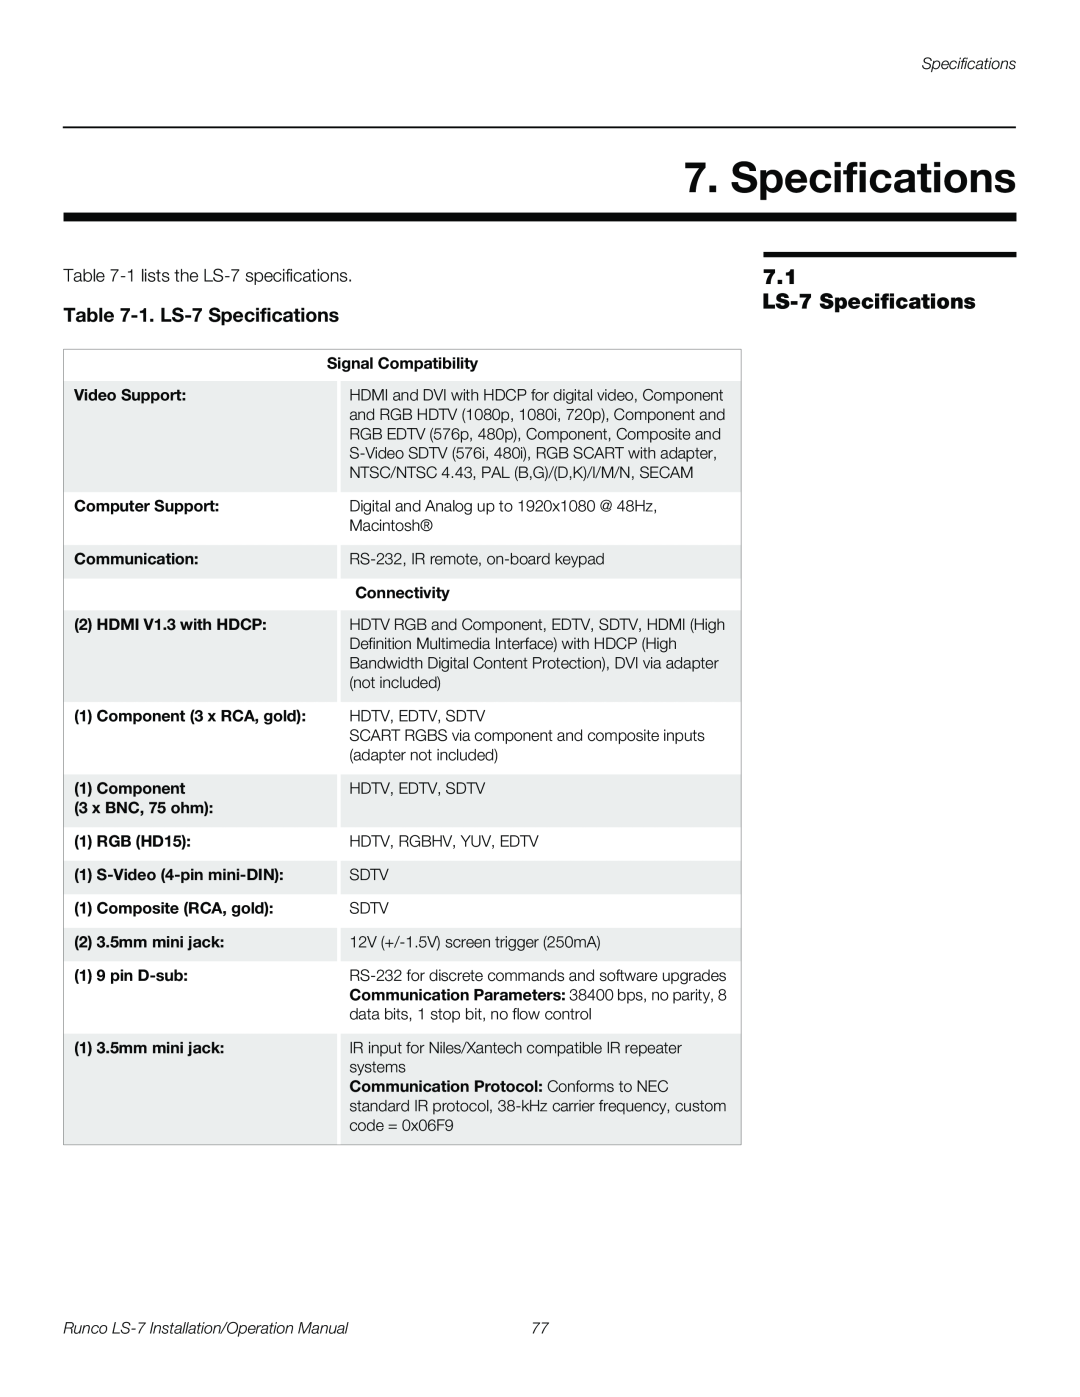 Runco operation manual 1. LS-7Specifications 